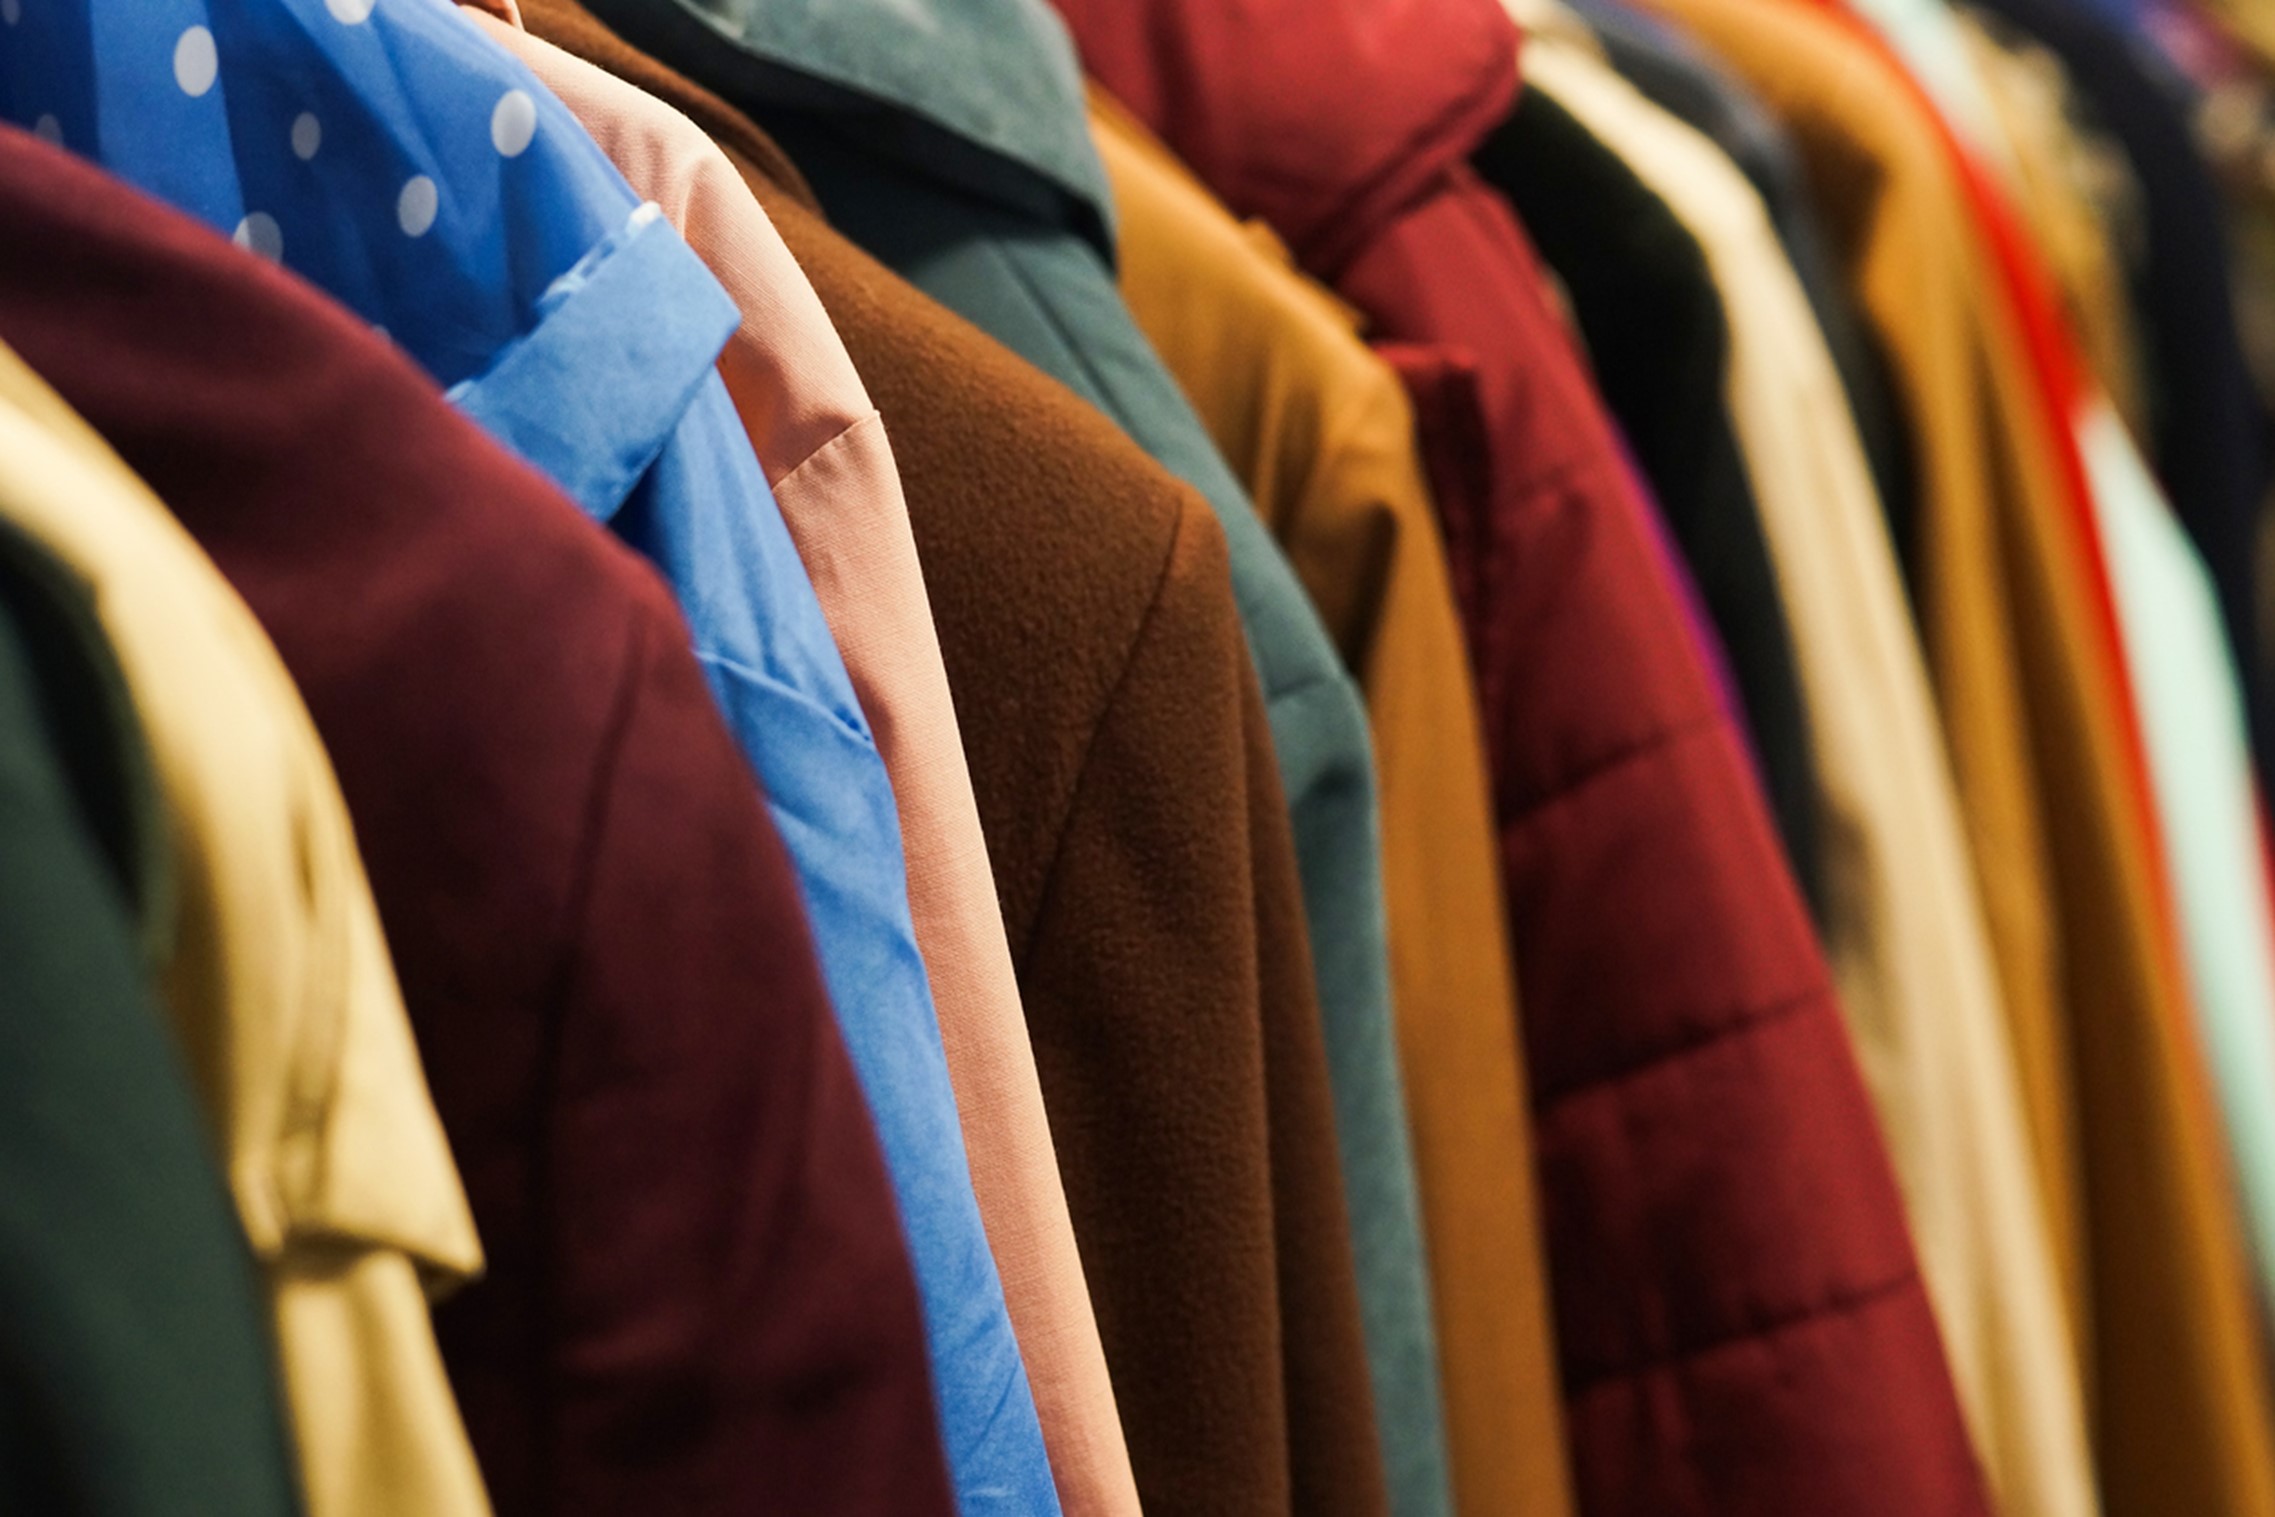 a rack of colourful coats